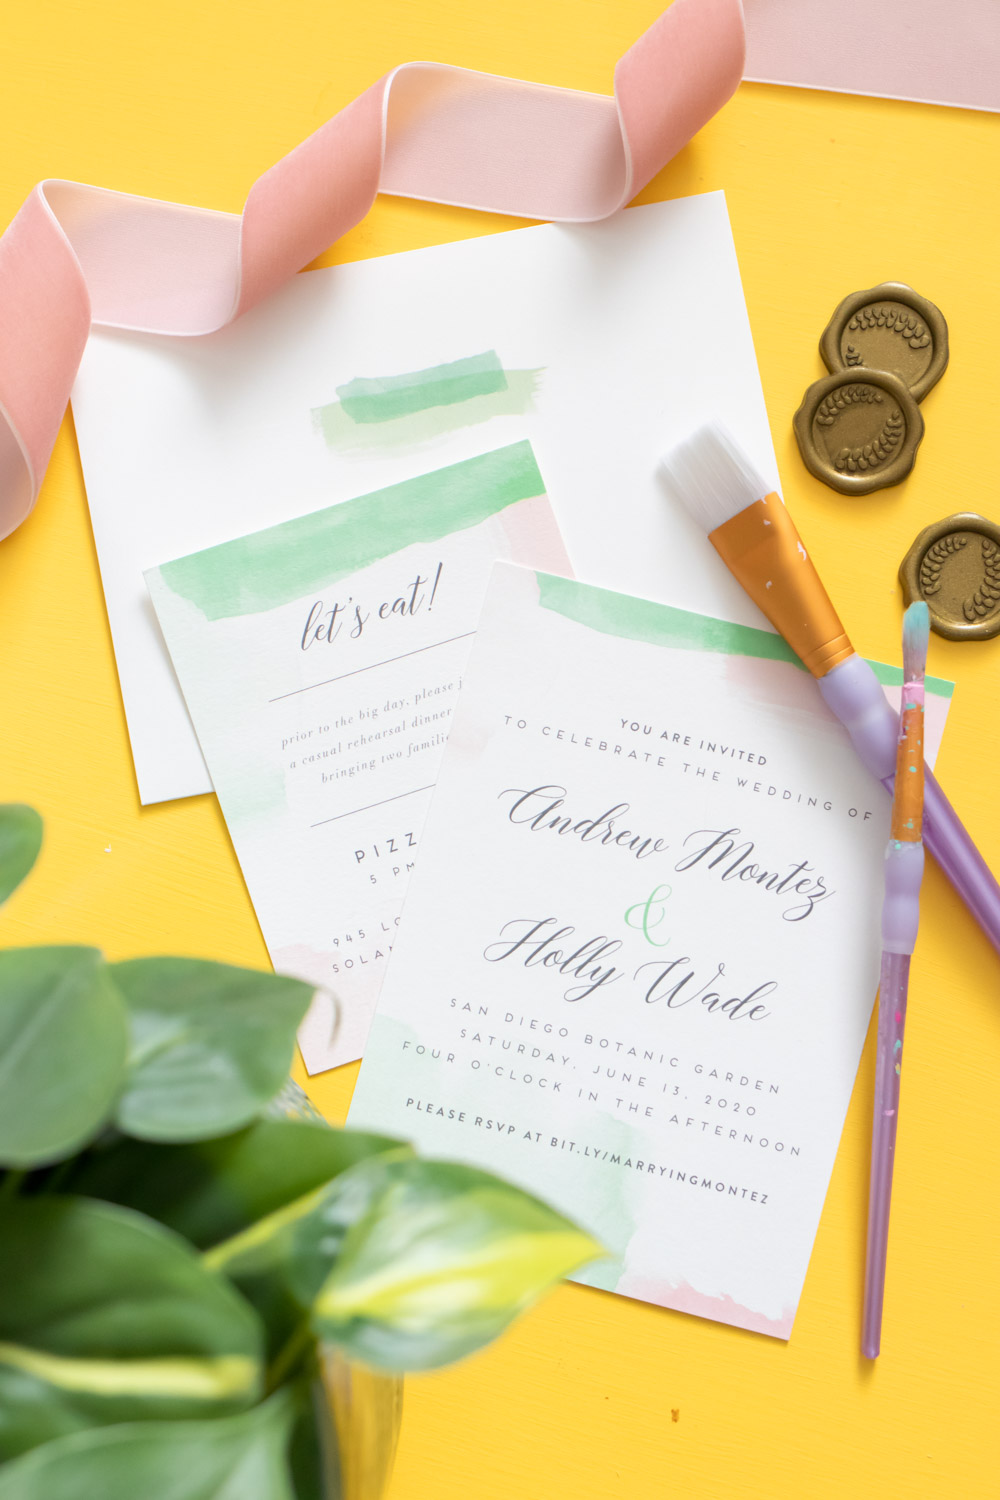 Layered wedding invitations and envelopes